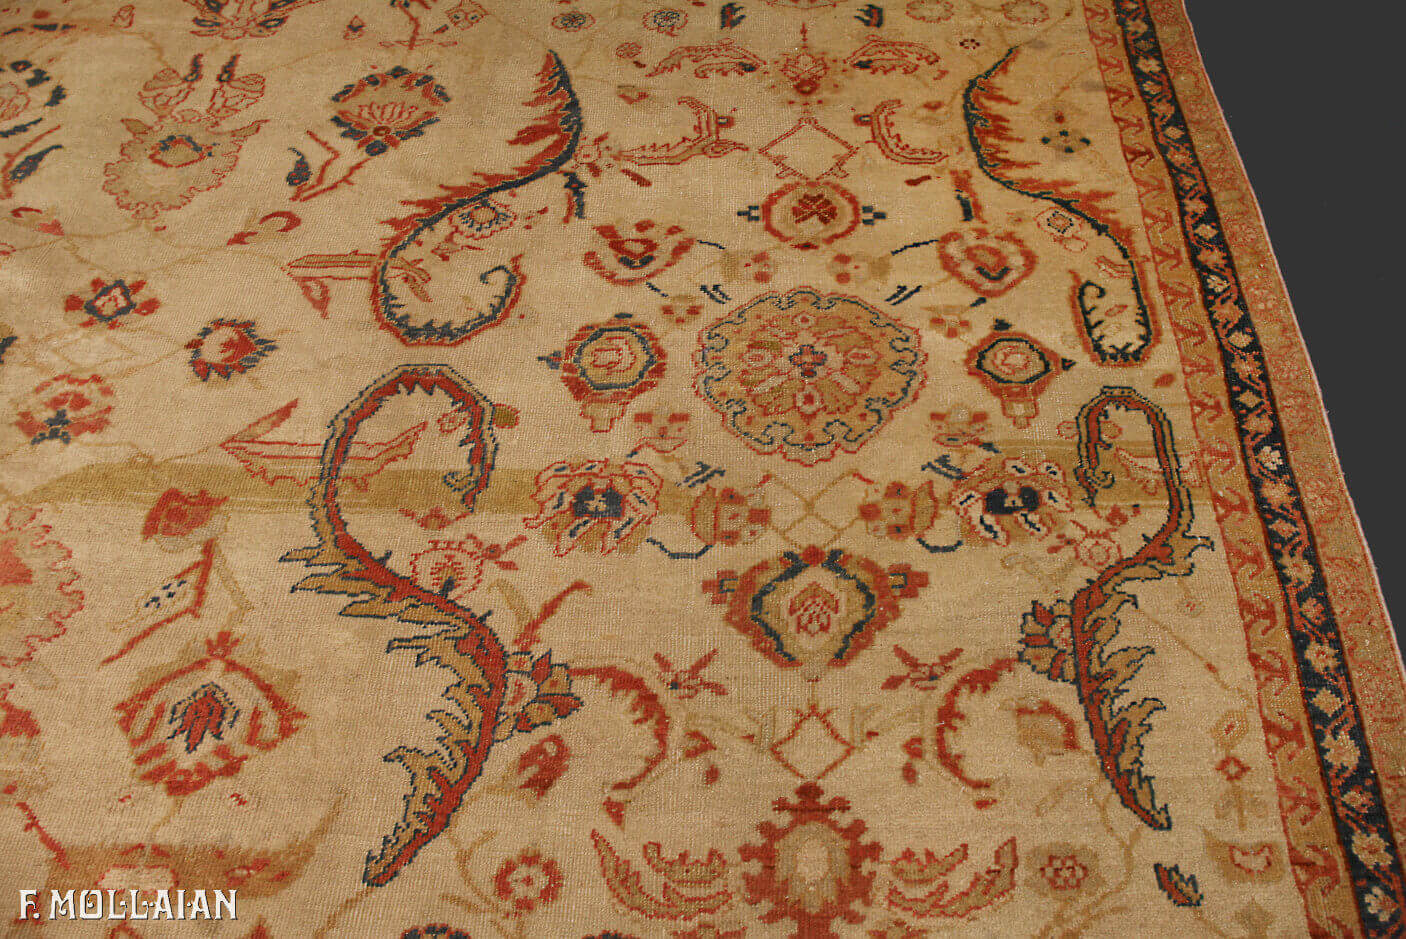 A Massive Antique Persian Mahal Ziegler Gallery Size Carpet n°:97068721